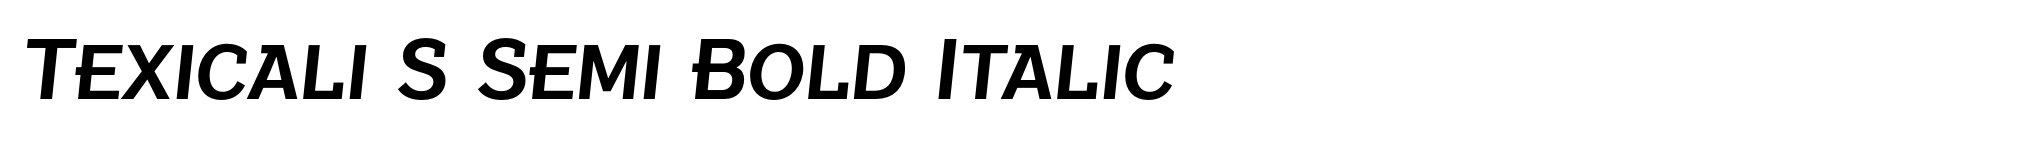 Texicali S Semi Bold Italic image